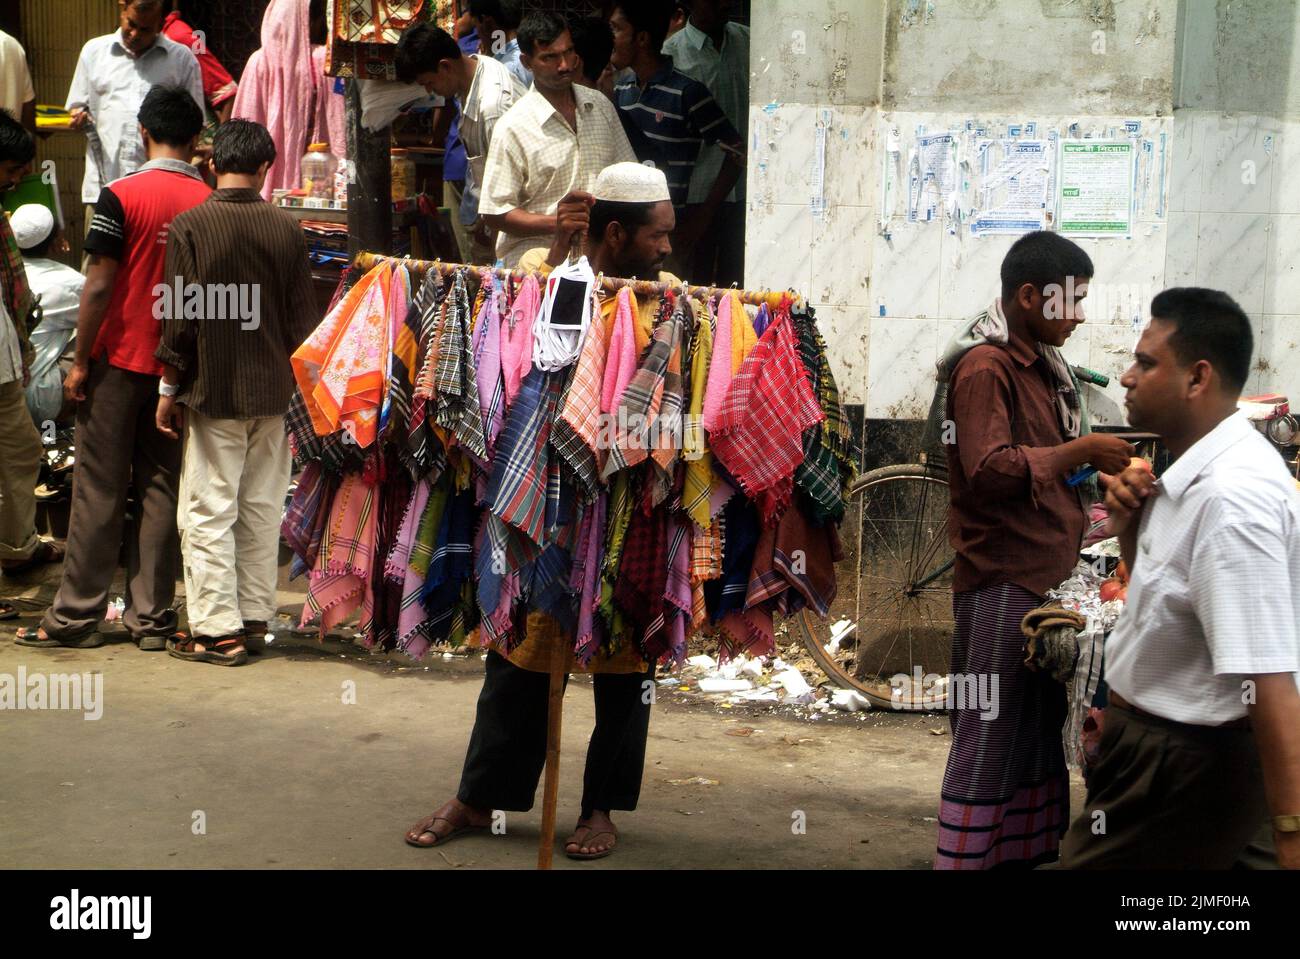 Dhaka, Bangladesh - September 17, 2007: Unidentified people on traditional street market Stock Photo